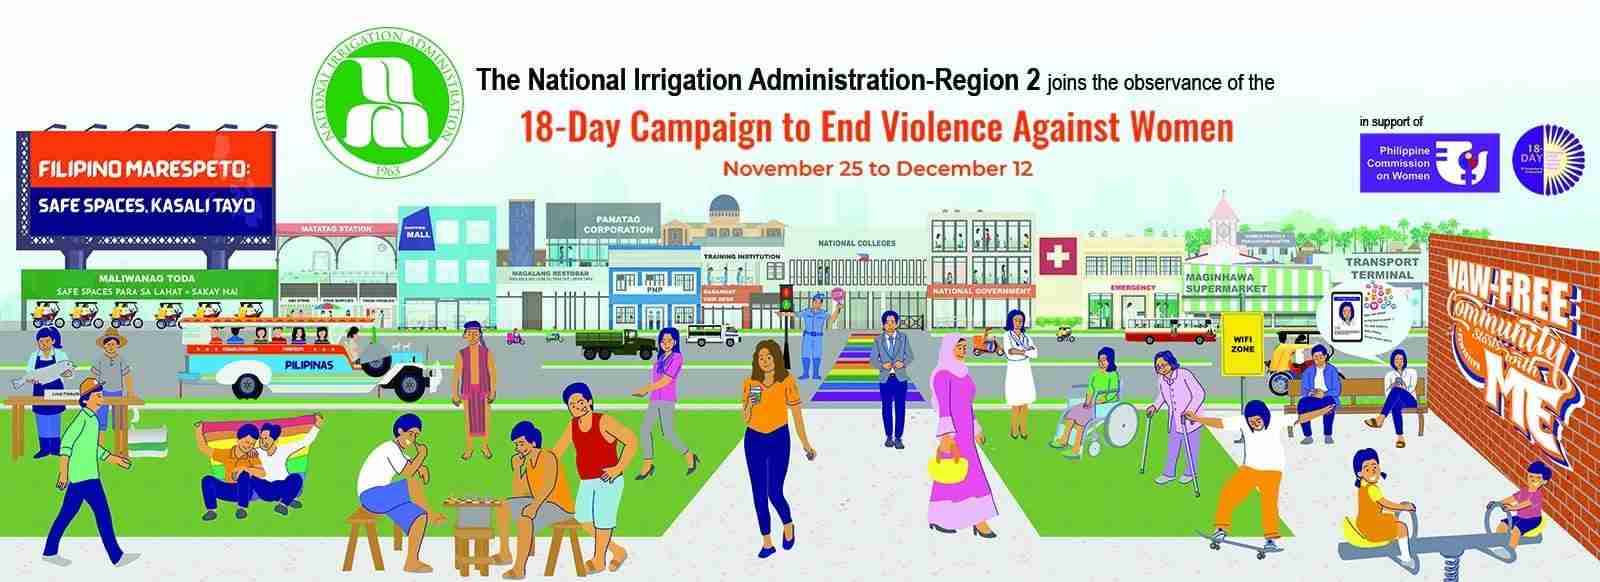 National Irrigation Administration - Region II